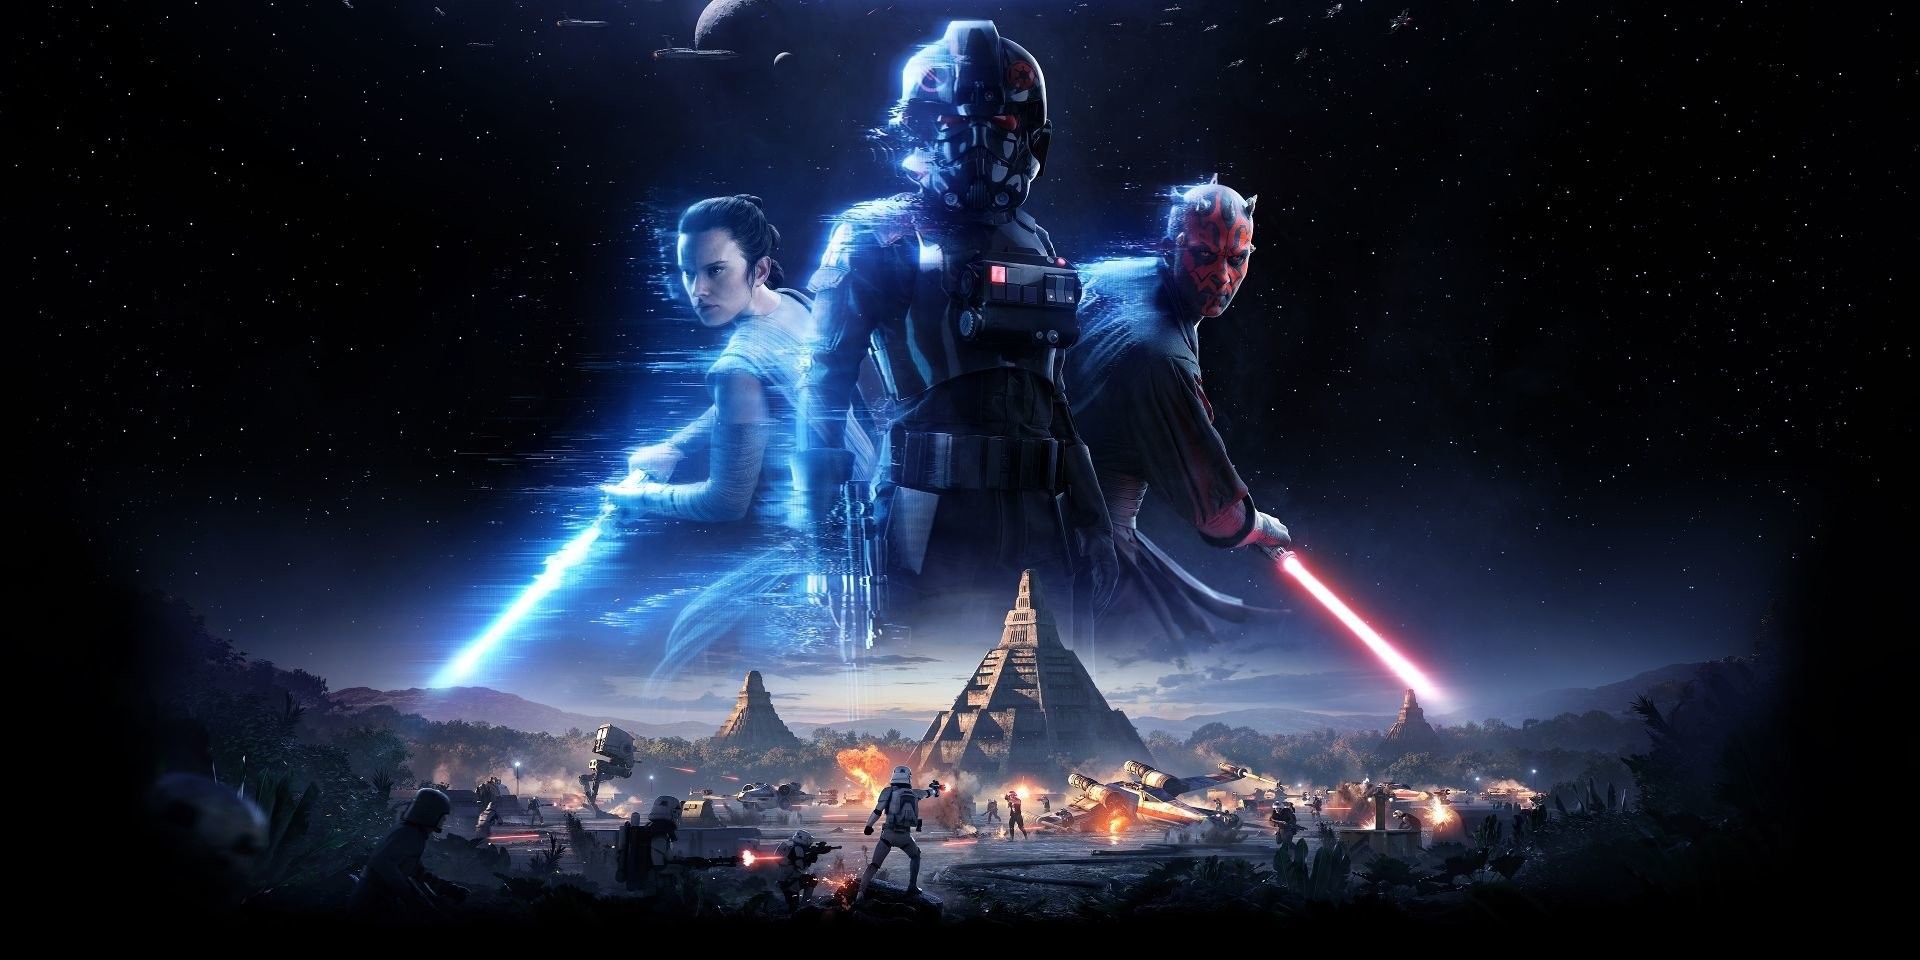 Is Star Wars: Battlefront worth it in 2021?